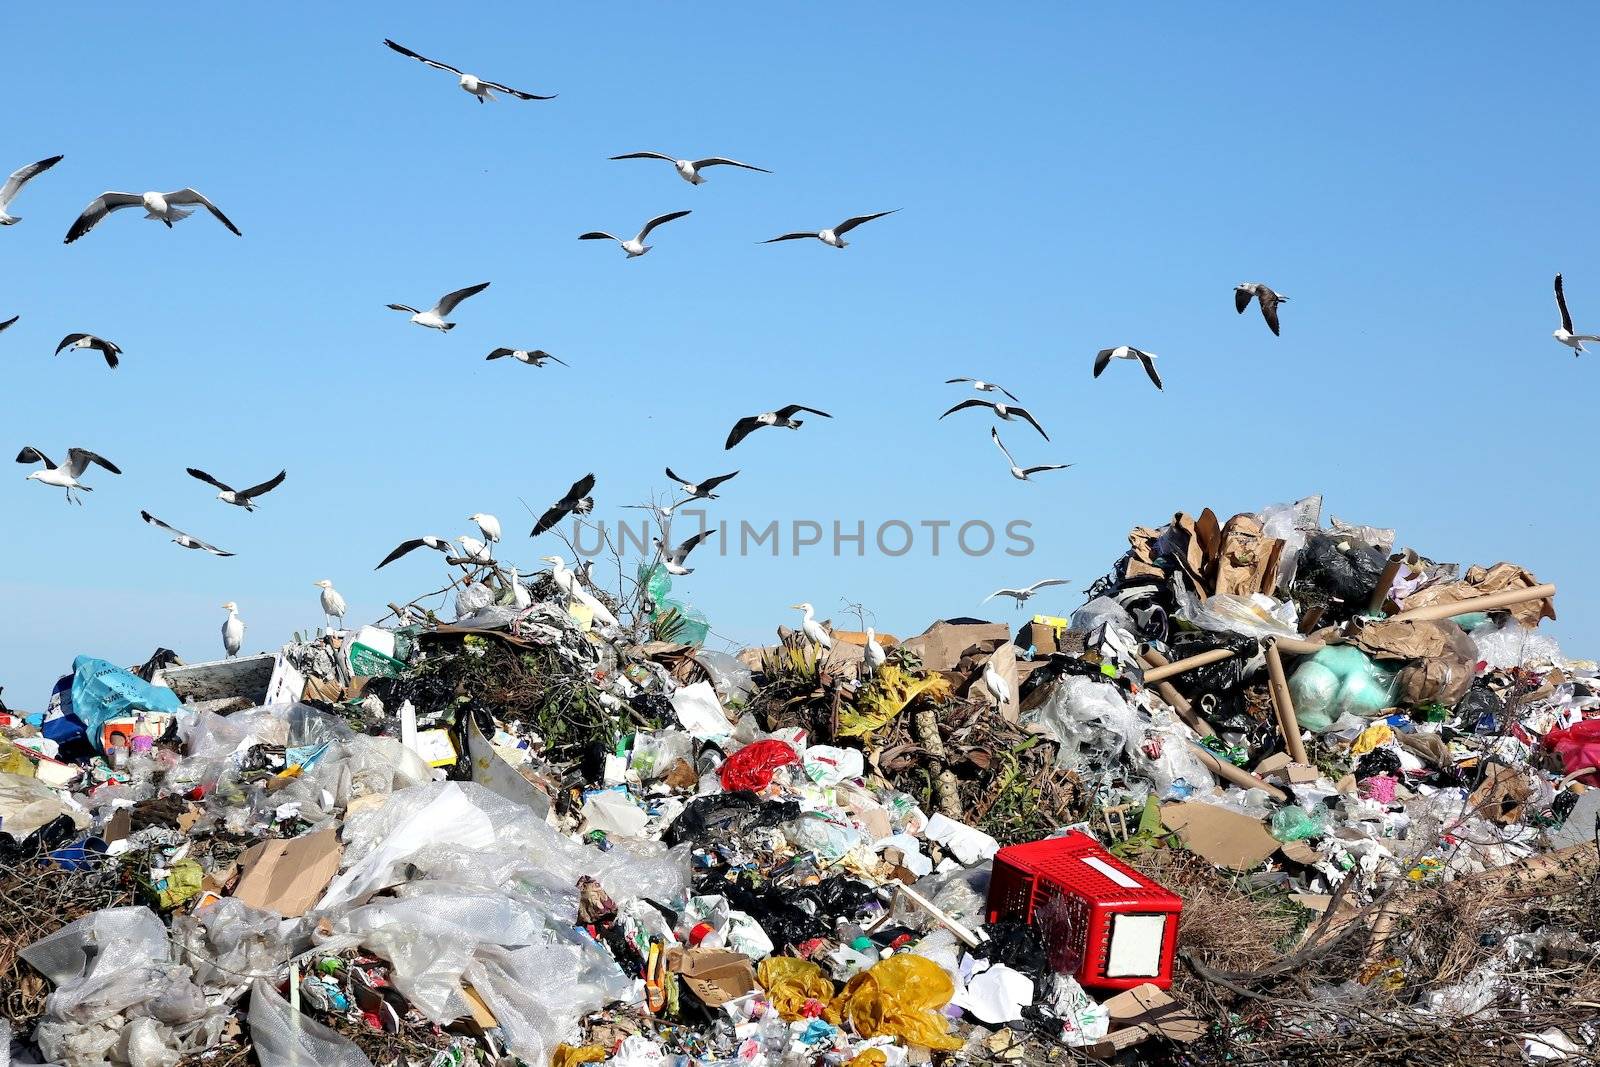 Waste Disposal Dump and Birds by fouroaks